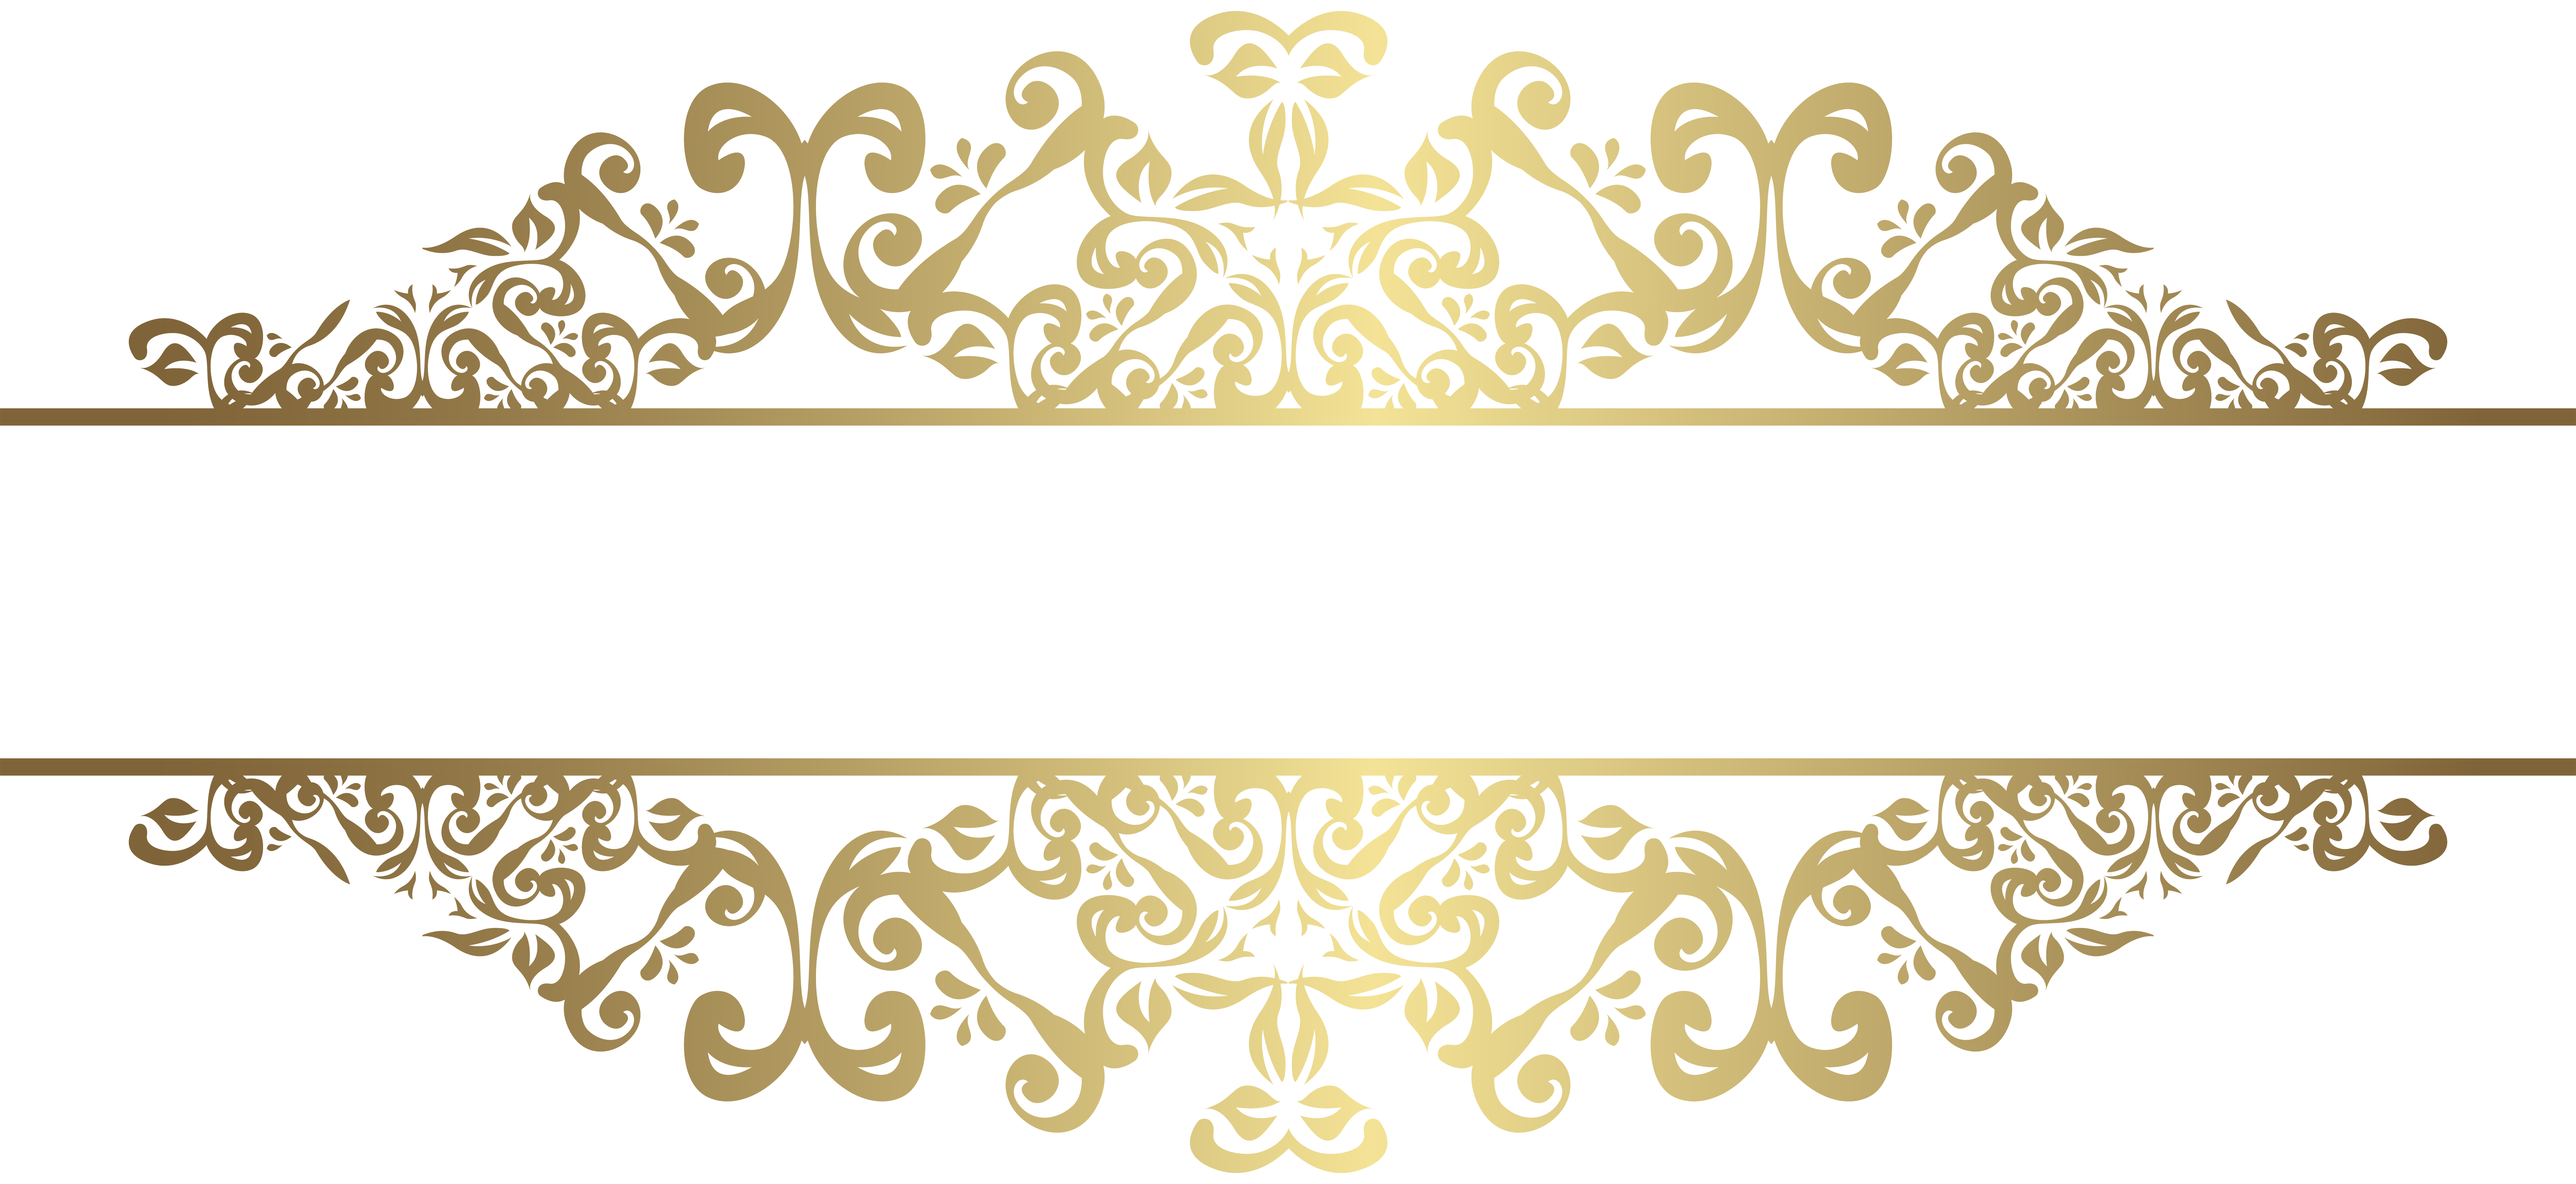 Decorative clipart decorative banner, Decorative decorative banner